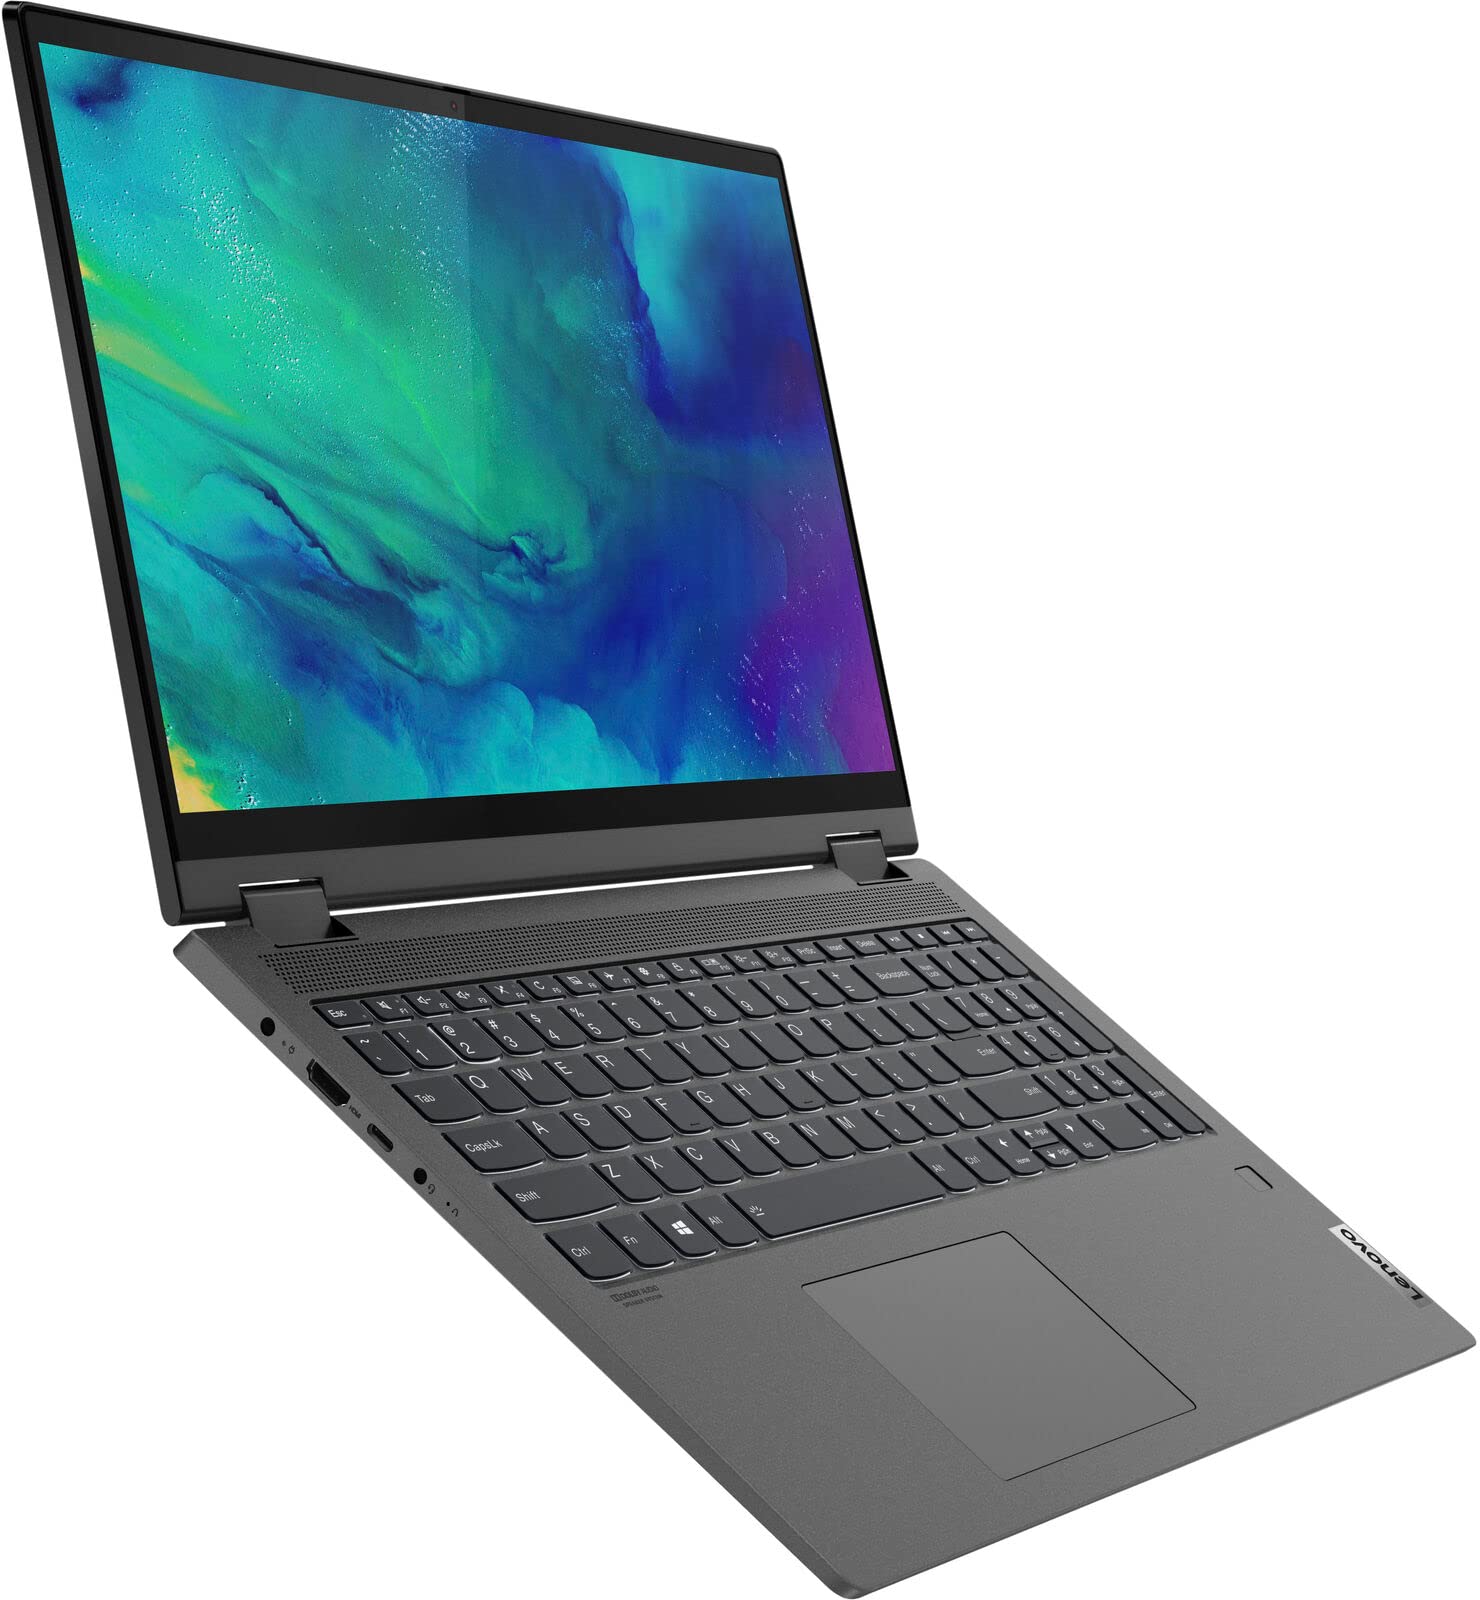 Lenovo Flex 5i 15.6" FHD Touch Screen Laptop | Intel Core i5-1135G7 Processor | 8GB RAM | 256GB SSD | Intel Iris Xe Graphics | Windows 11 Pro | Graphite Grey | Bundle with Stylus Pen